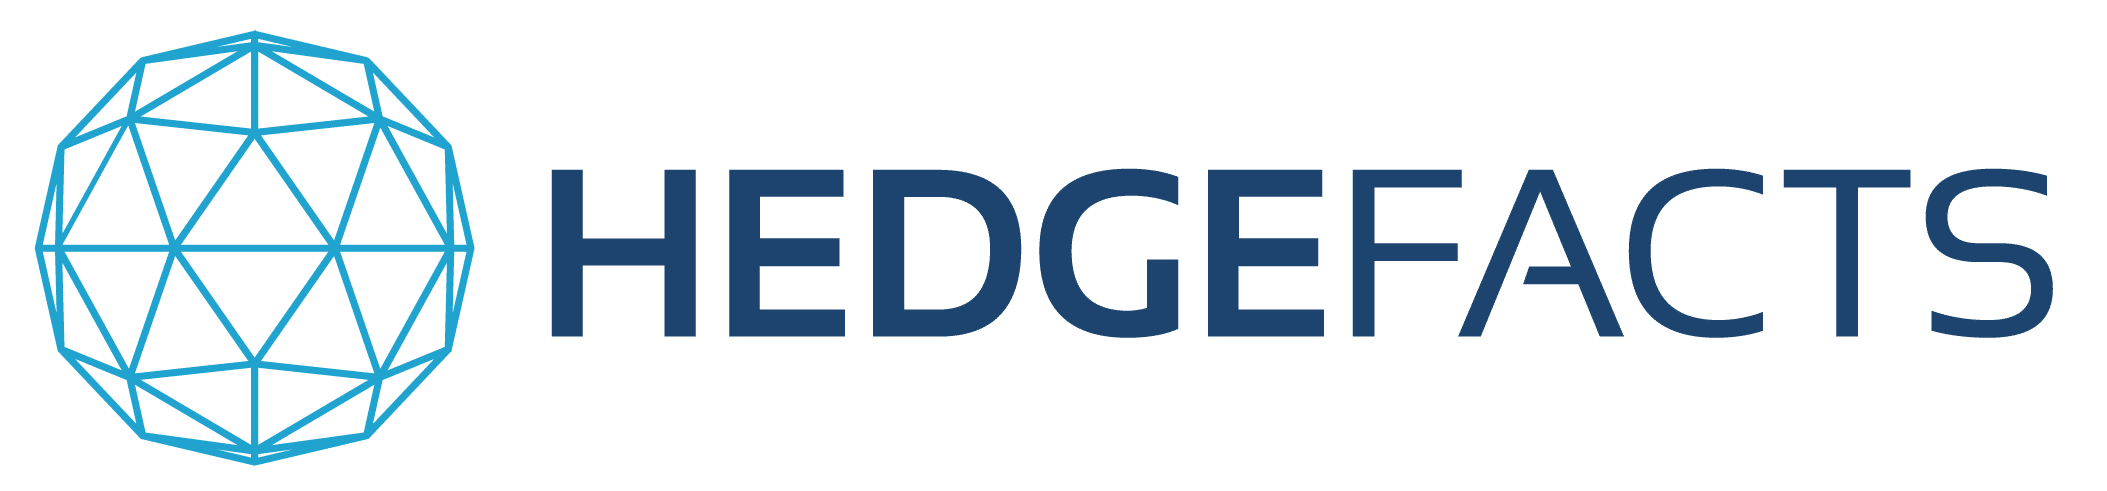 hedgefacts logo-300dpi crop